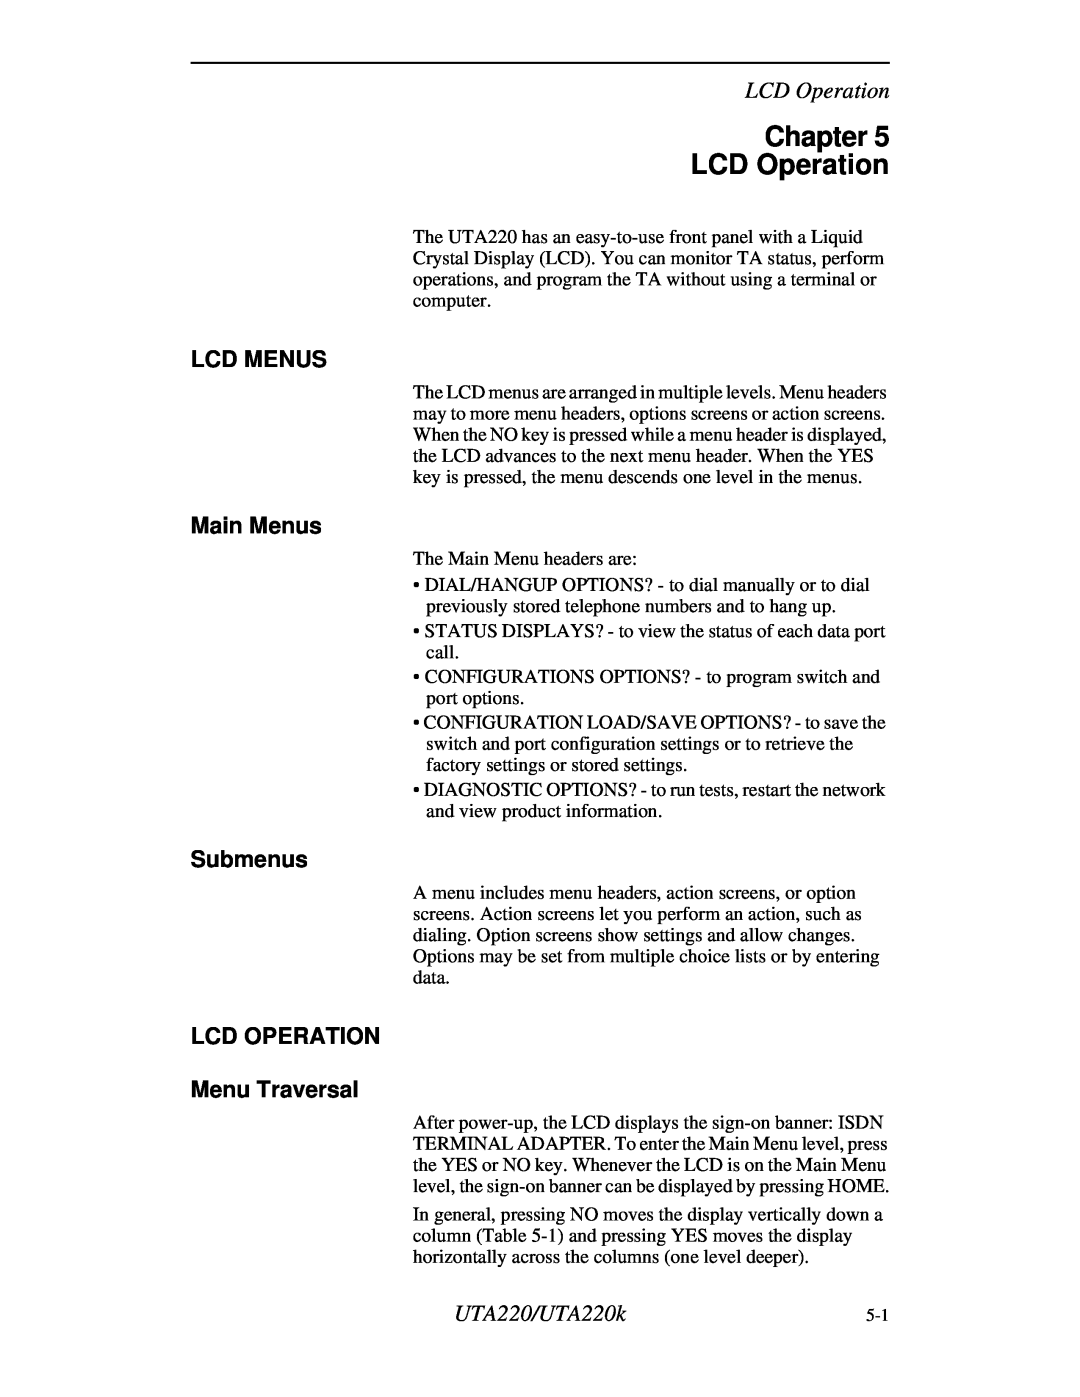 Northern UTA220/UTA220k manual Chapter LCD Operation, Lcd Menus, Main Menus, Submenus, LCD OPERATION Menu Traversal 